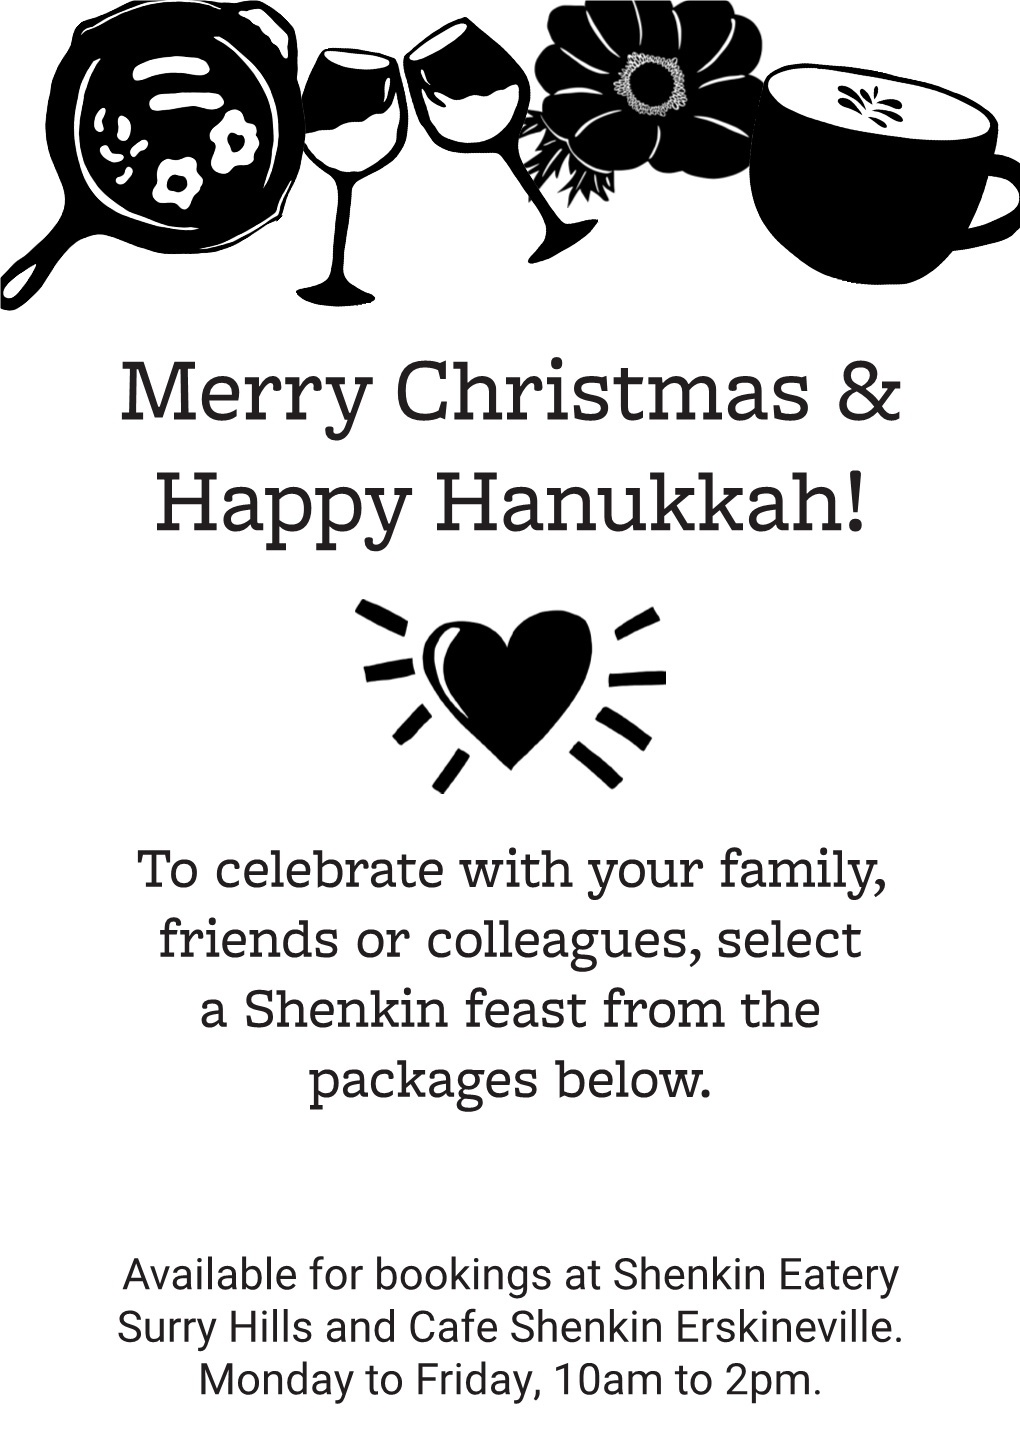 Merry Christmas & Happy Hanukkah!